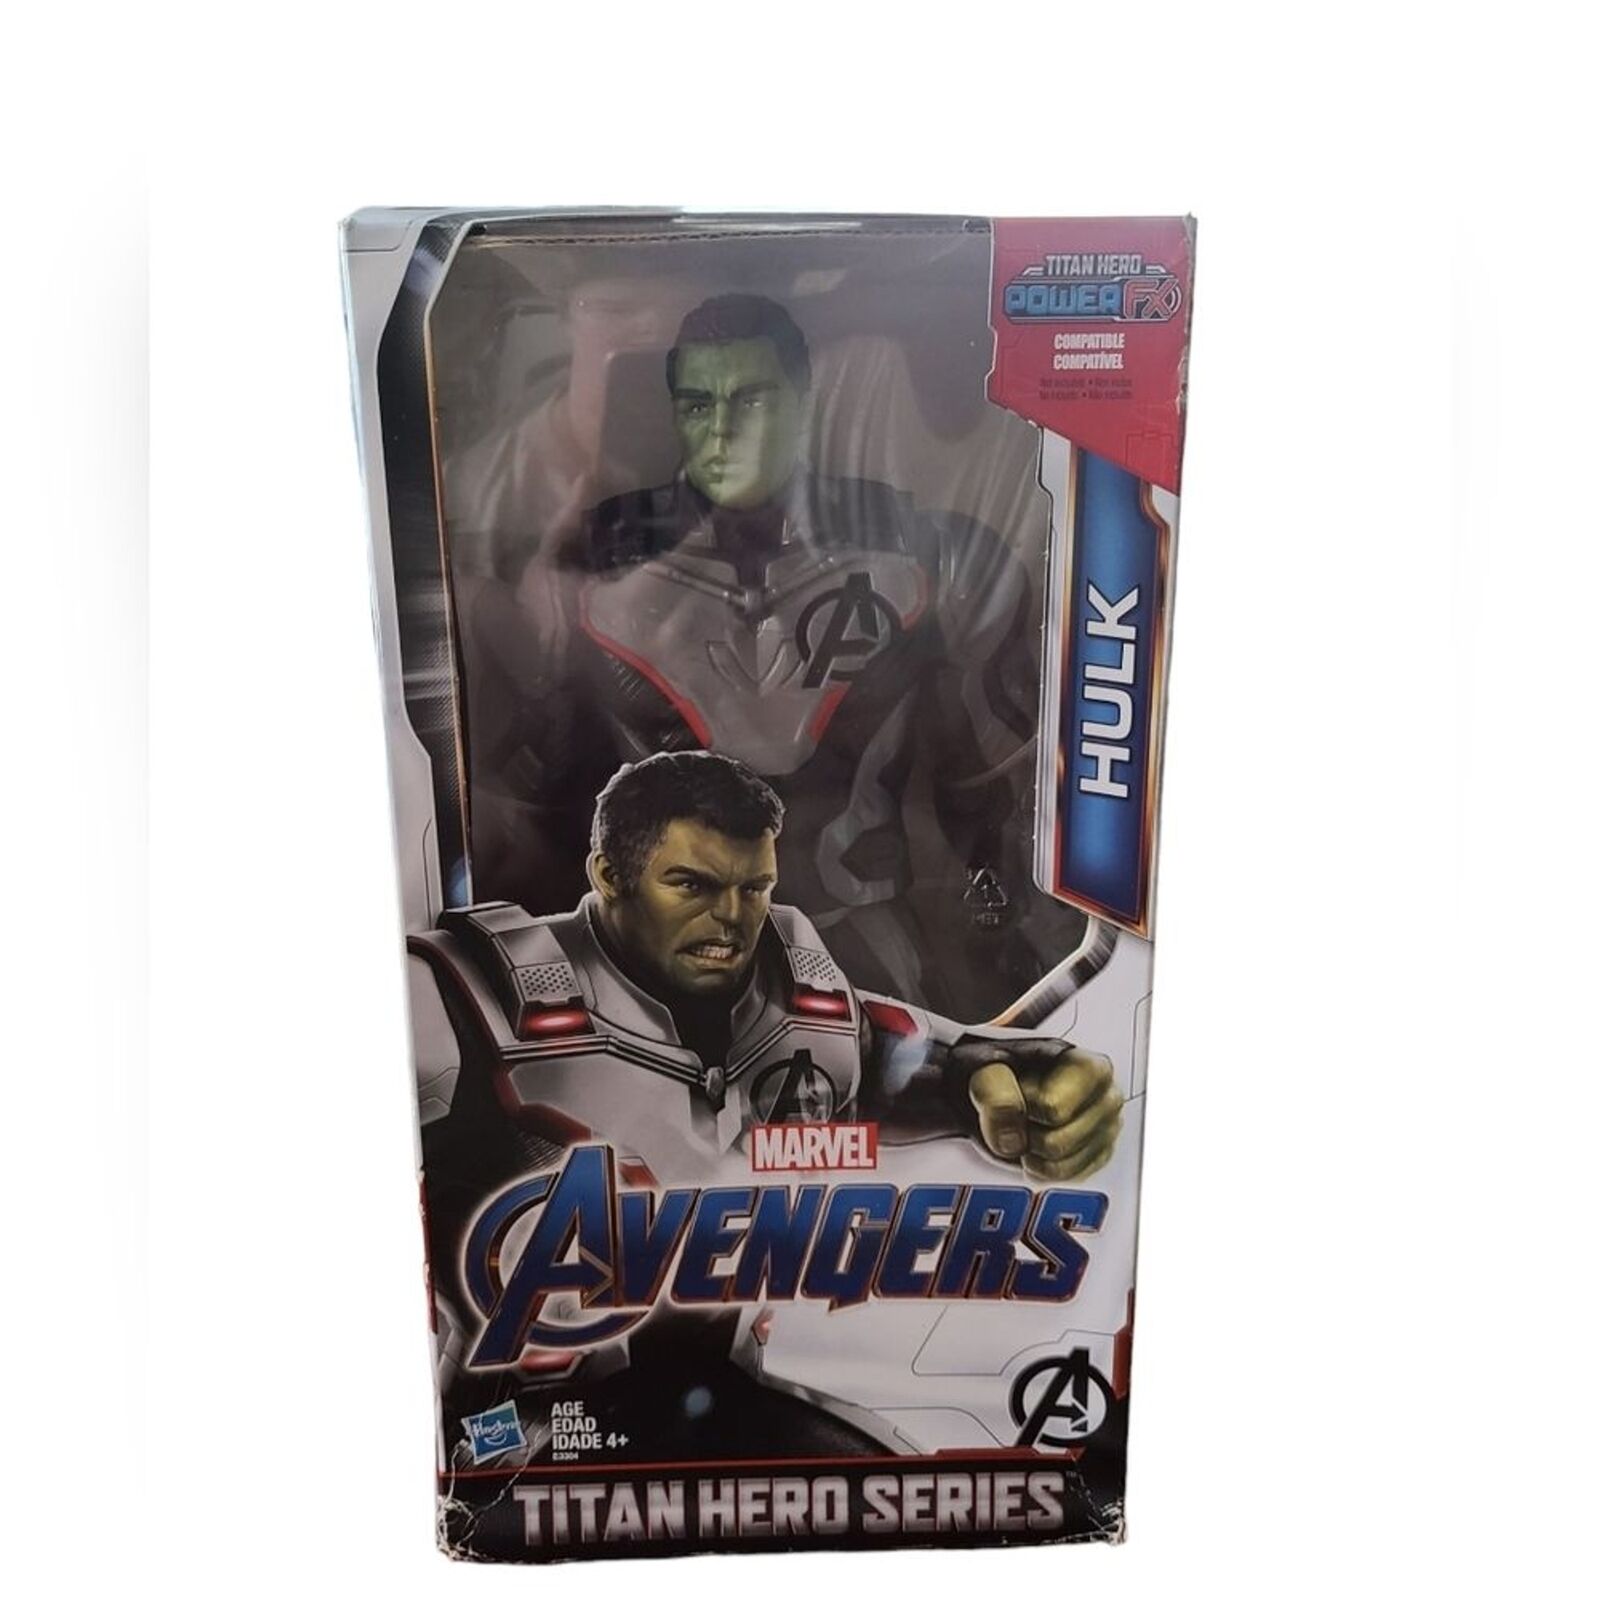 NIB Hasbro Marvel Avengers Titan Hero Series Hulk